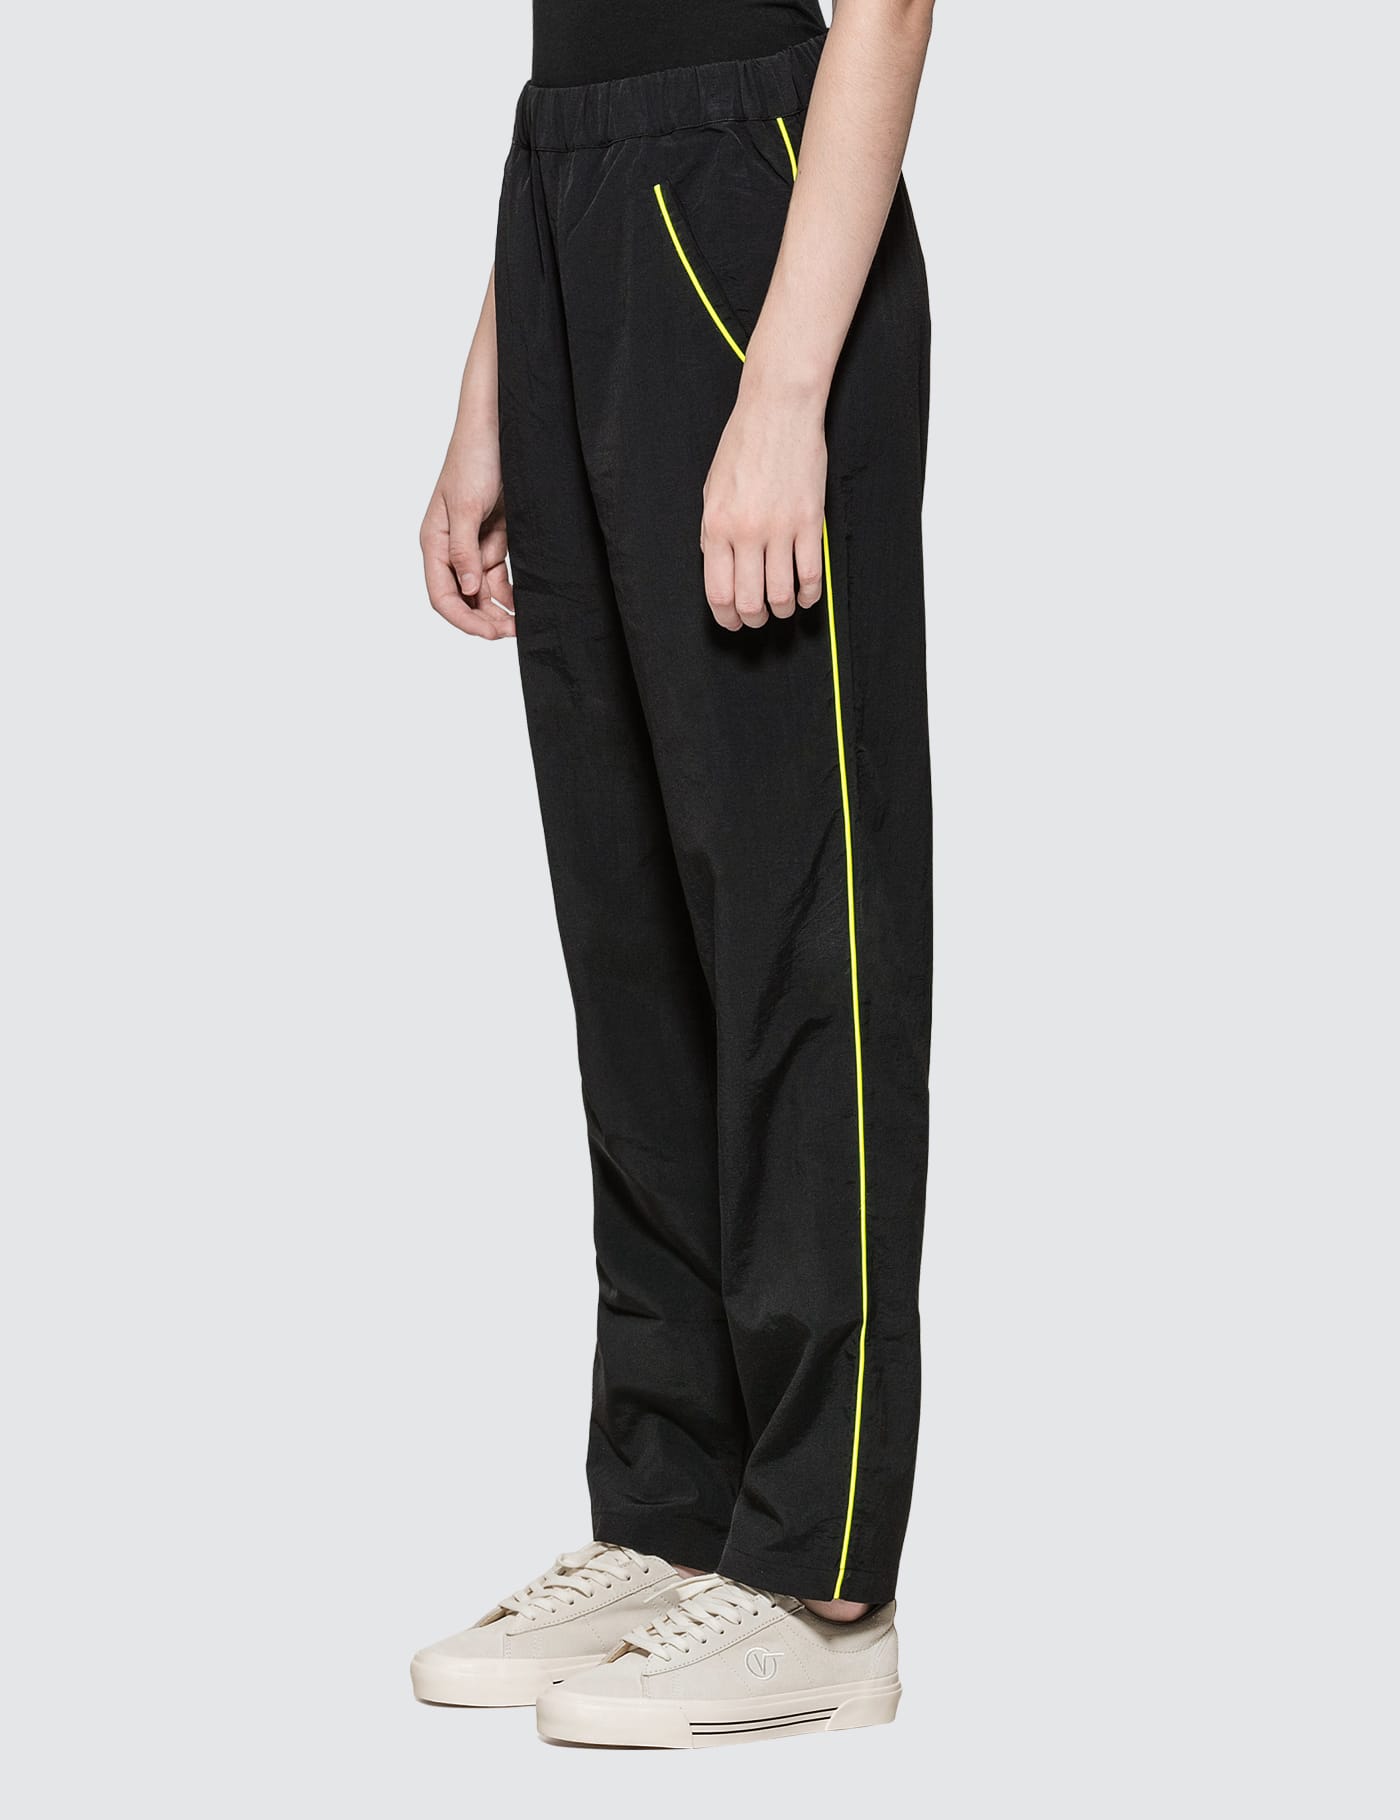 Kirin - Piping Nylon Track Pants | HBX - Globally Curated Fashion